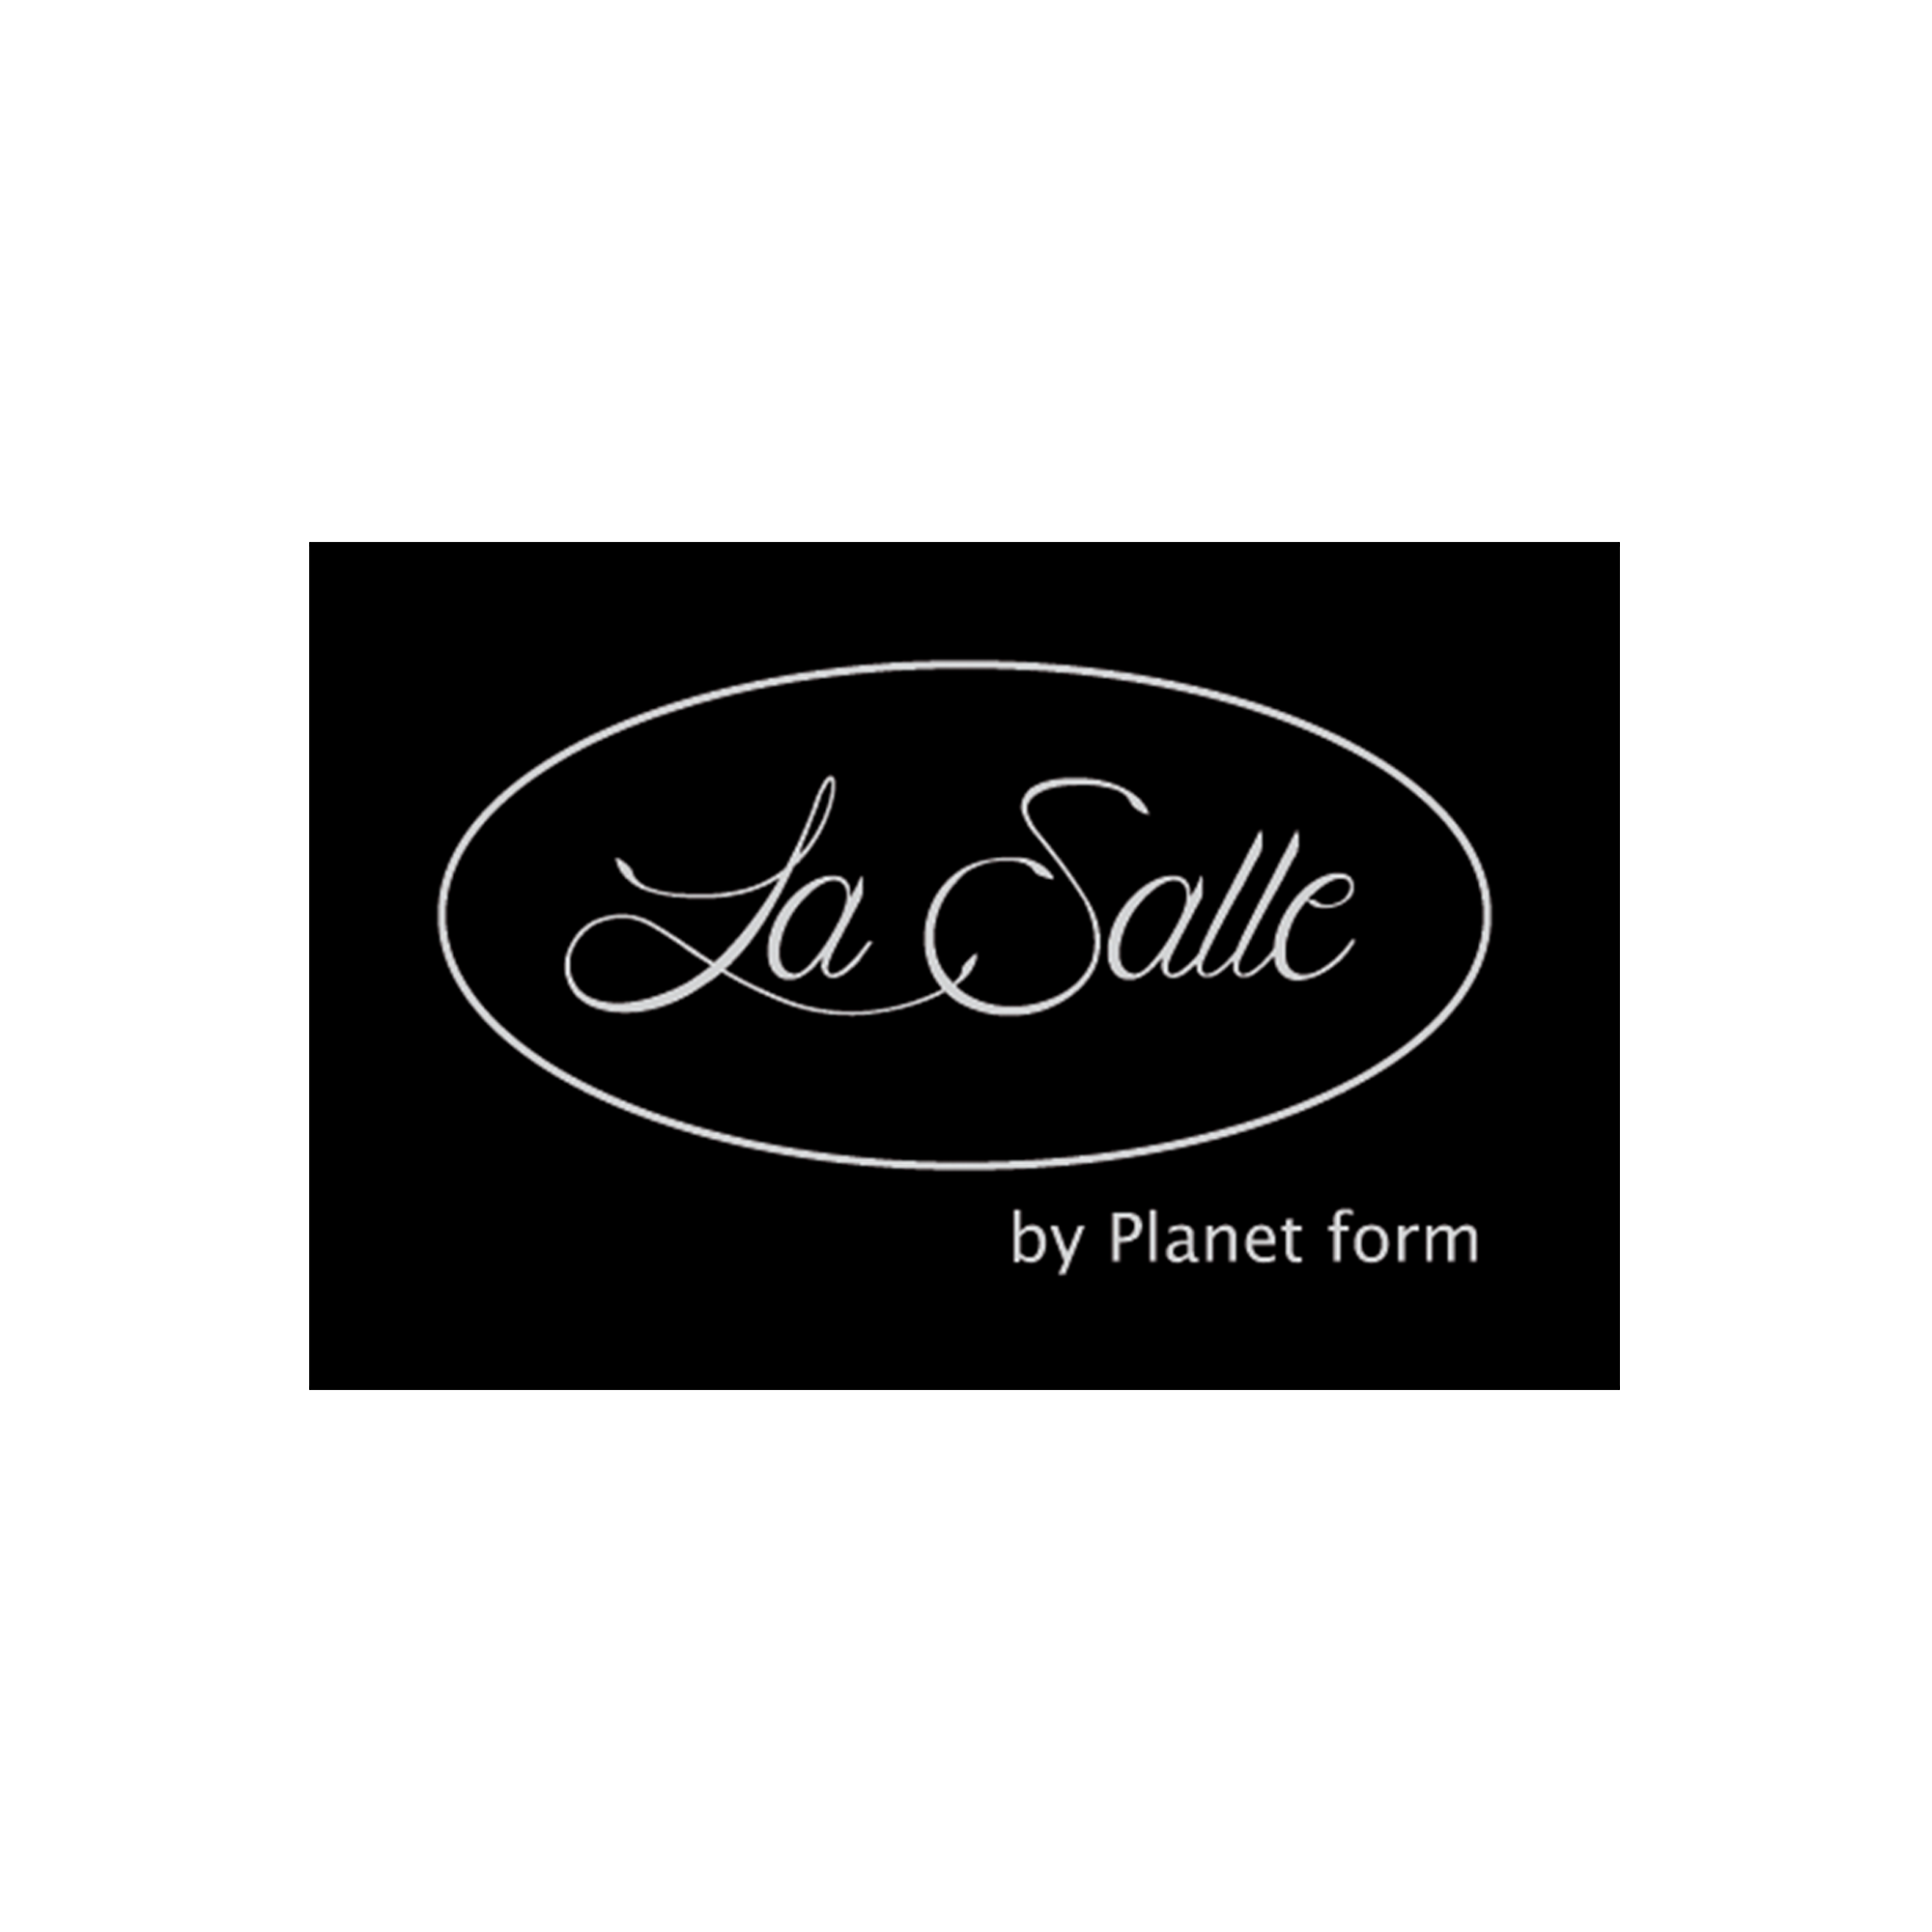 La Salle by Planet form